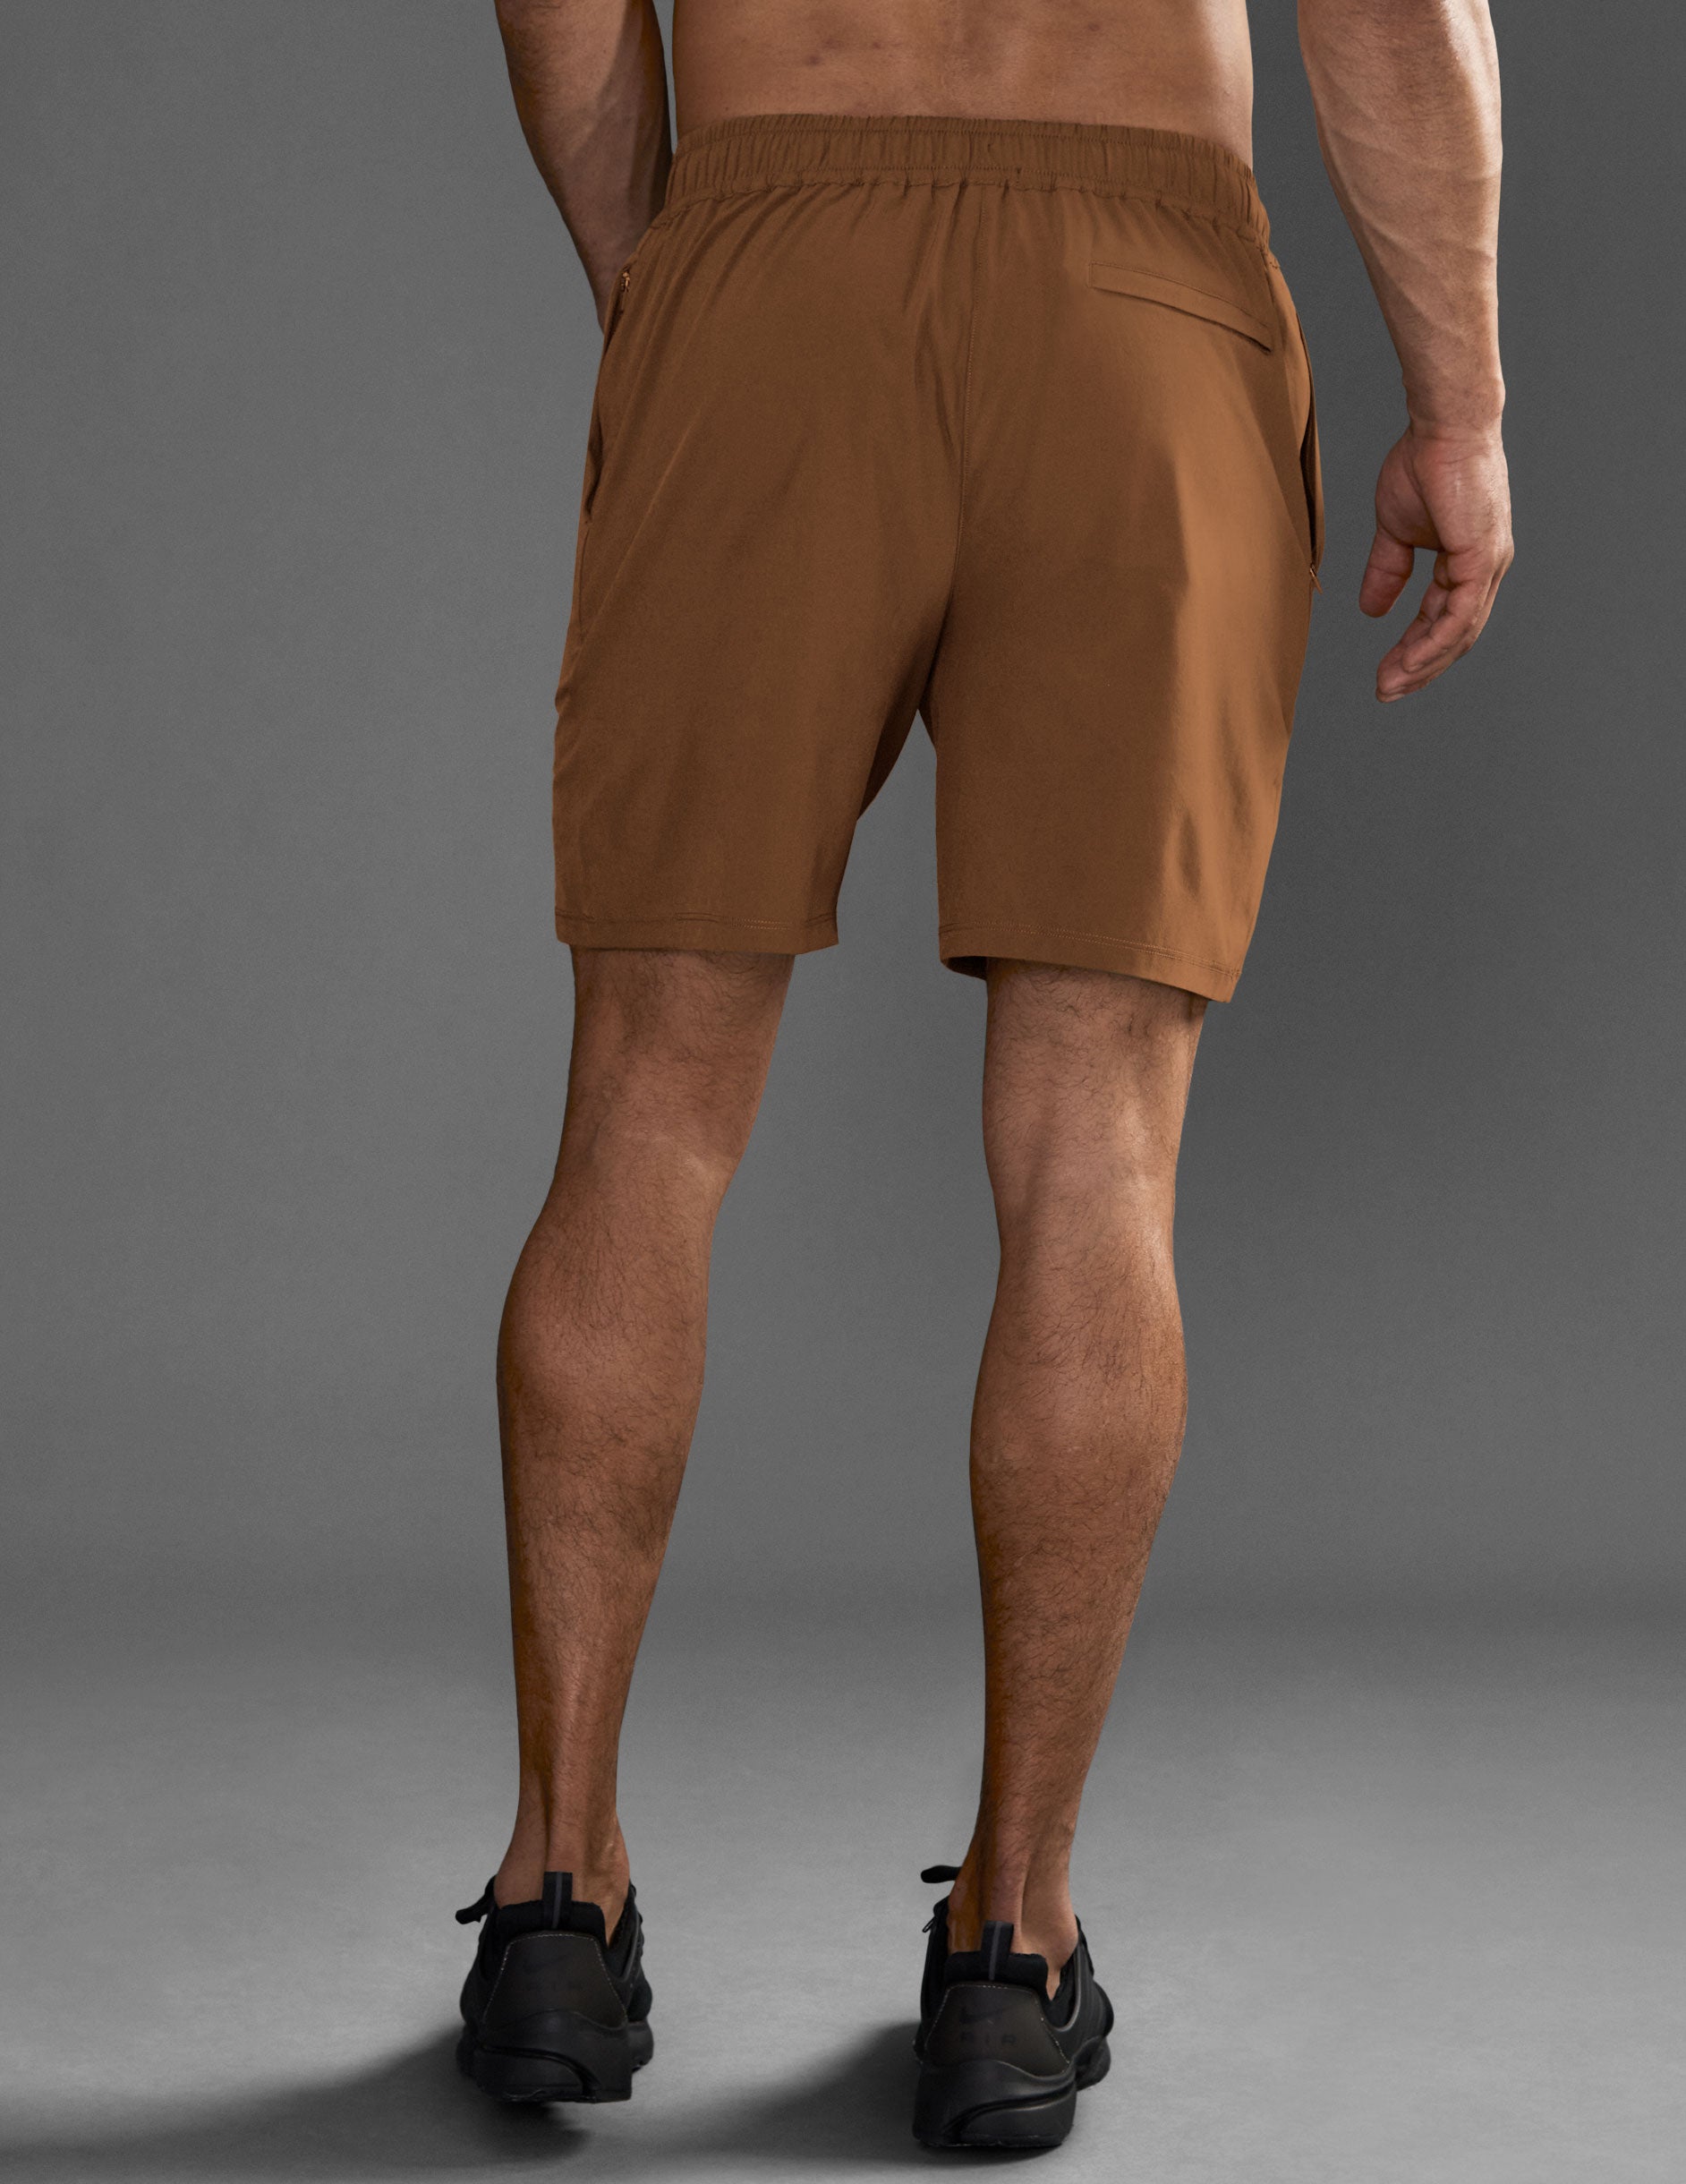 brown men's shorts